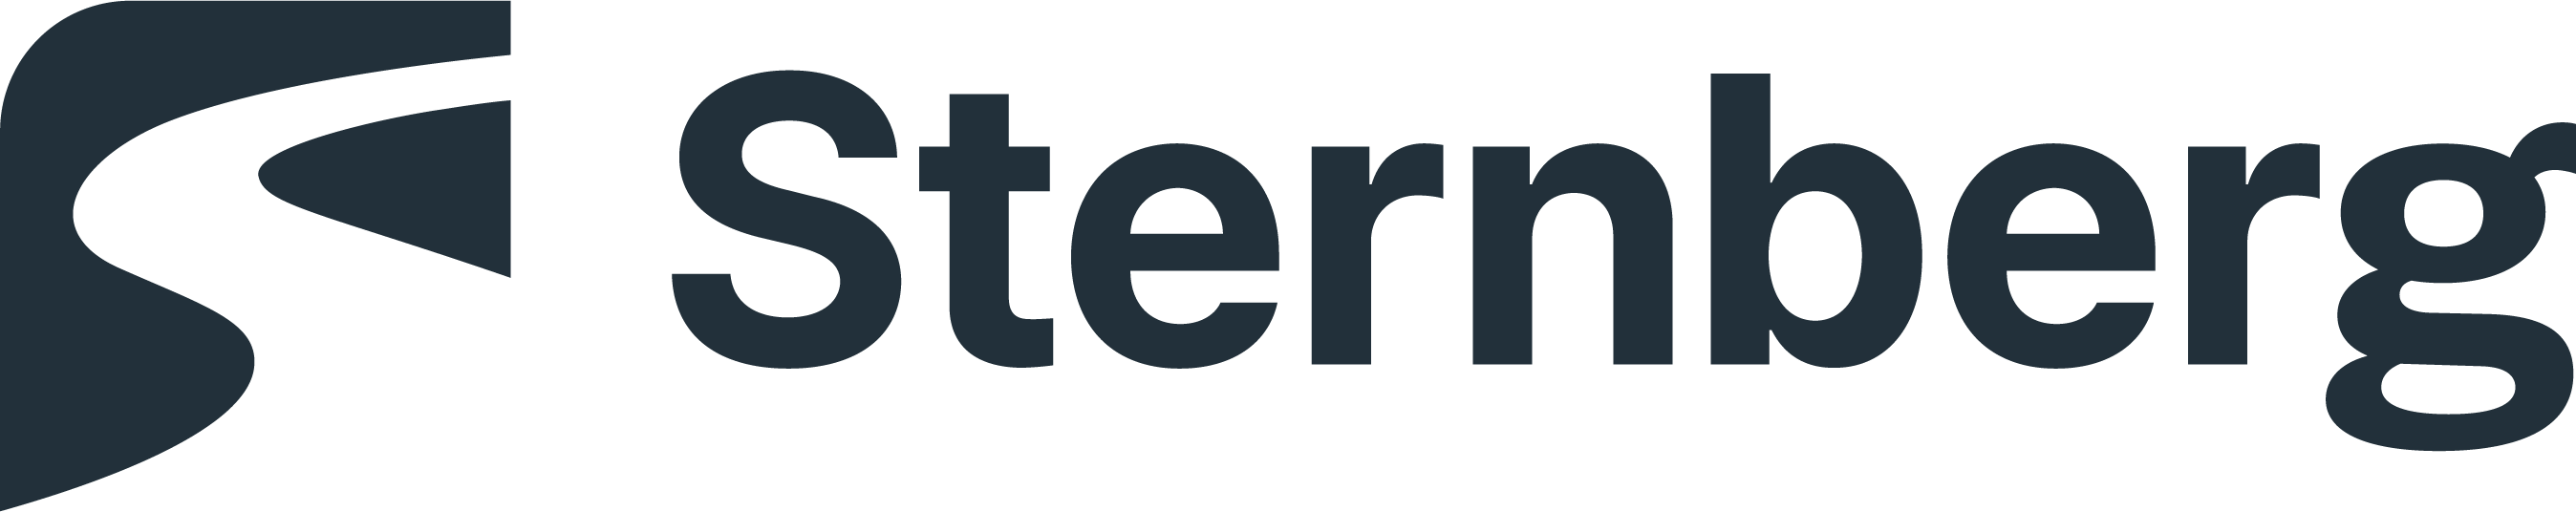 sternberg logo 400px.png